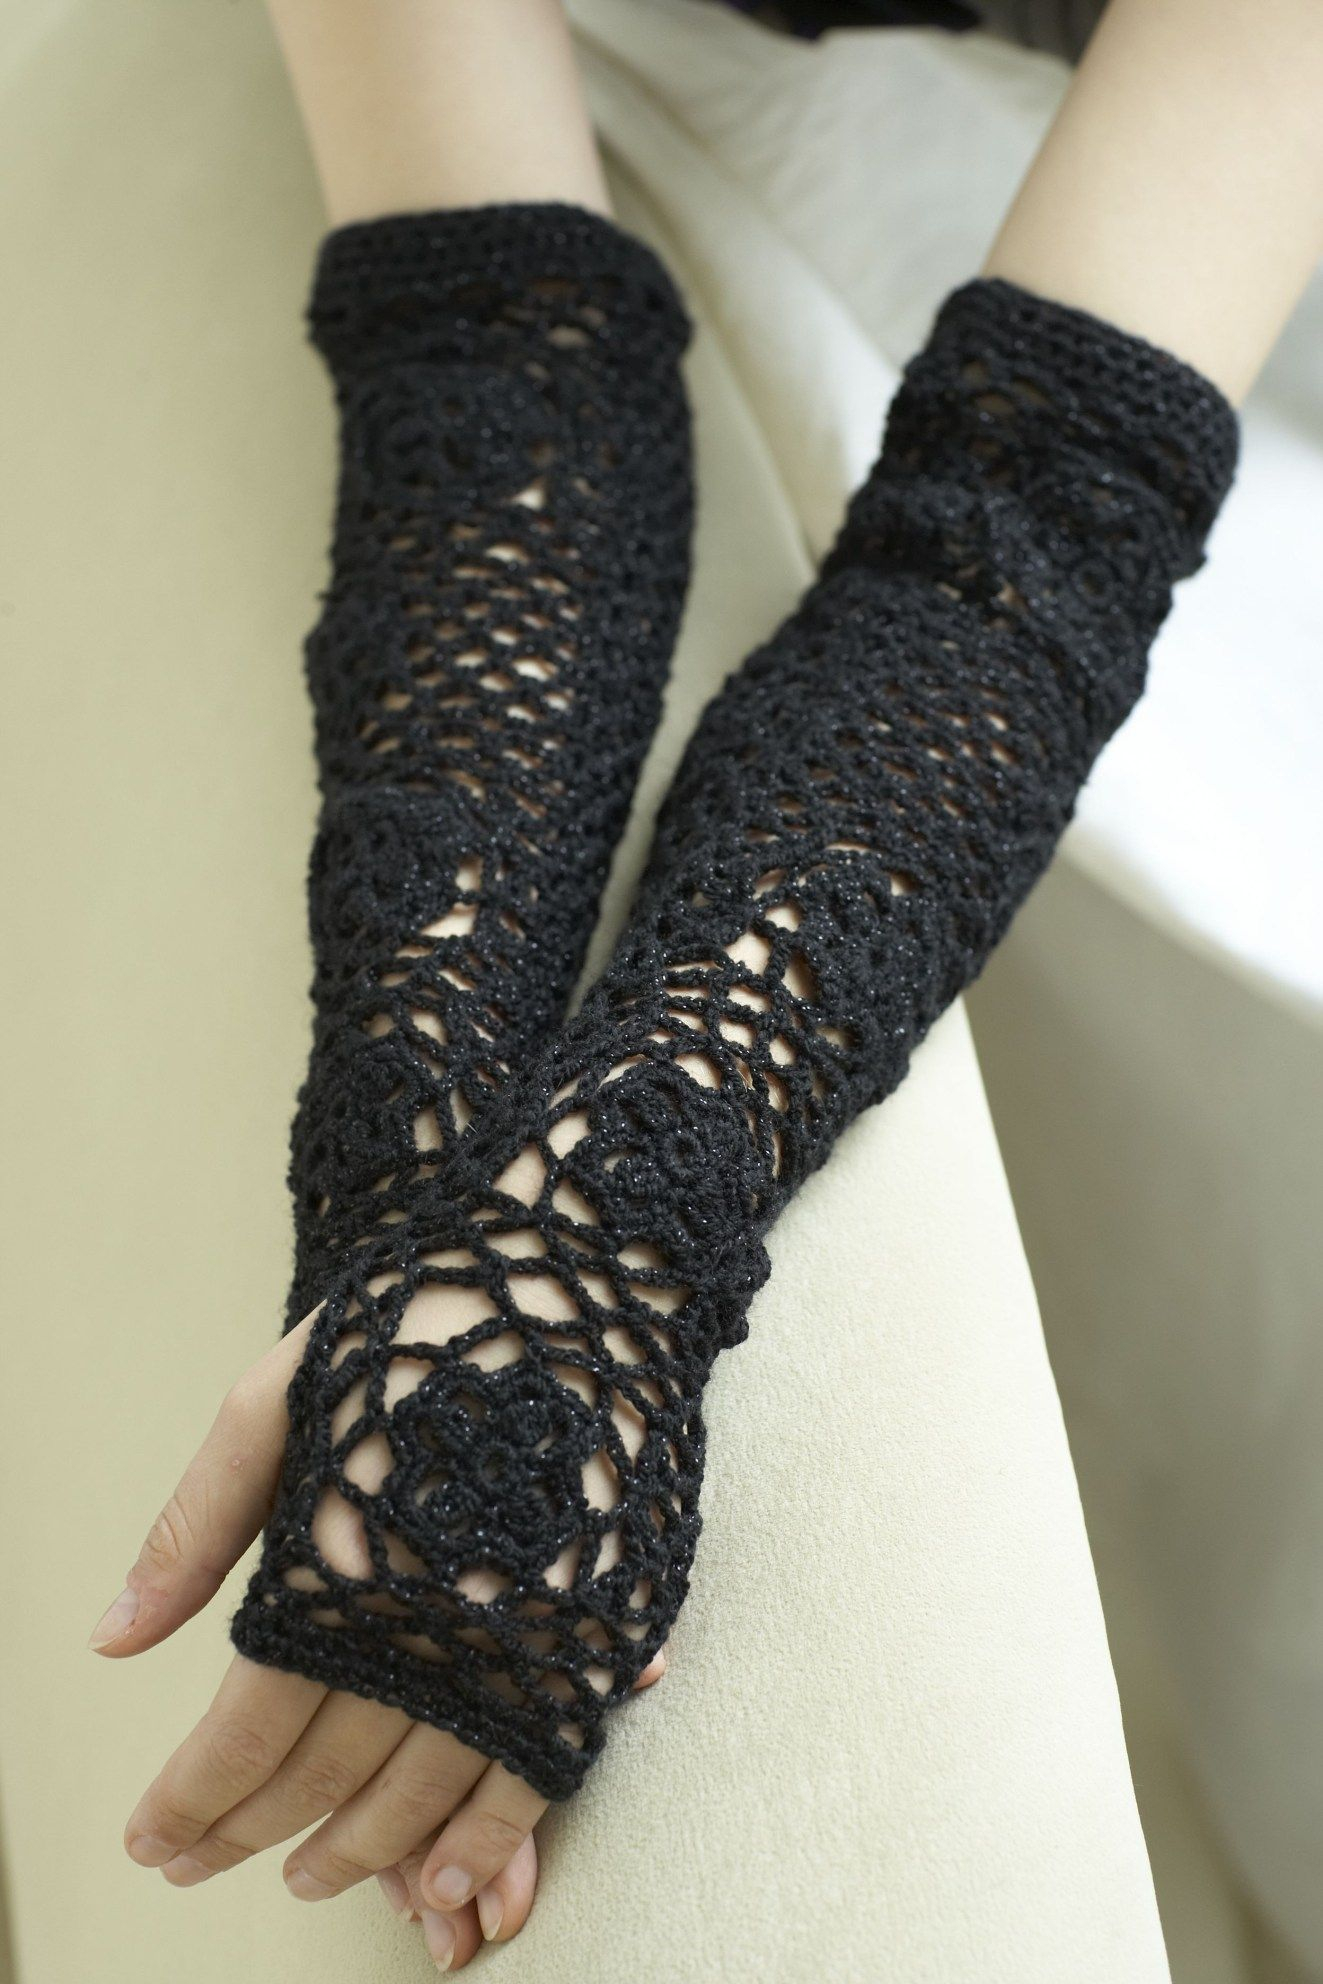 Crochet Wrist Warmers Free Pattern Crochet Fingerless Gloves Free Patterns Crafting Pinterest